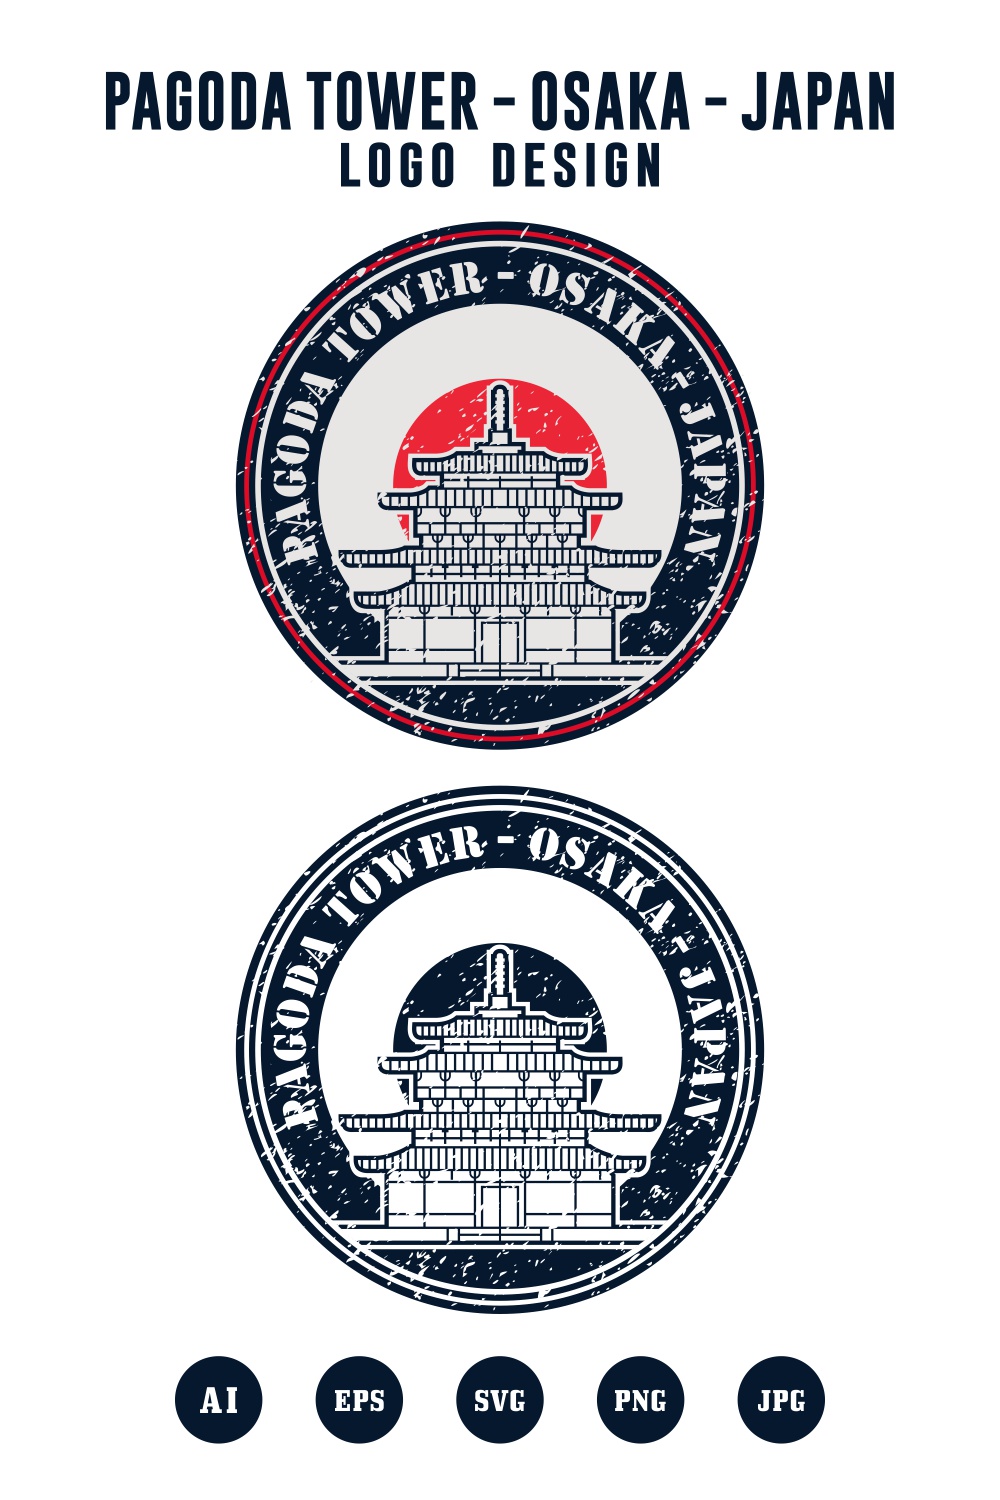 Pagoda Tower Osaka Japan logo design collection - $4 pinterest preview image.